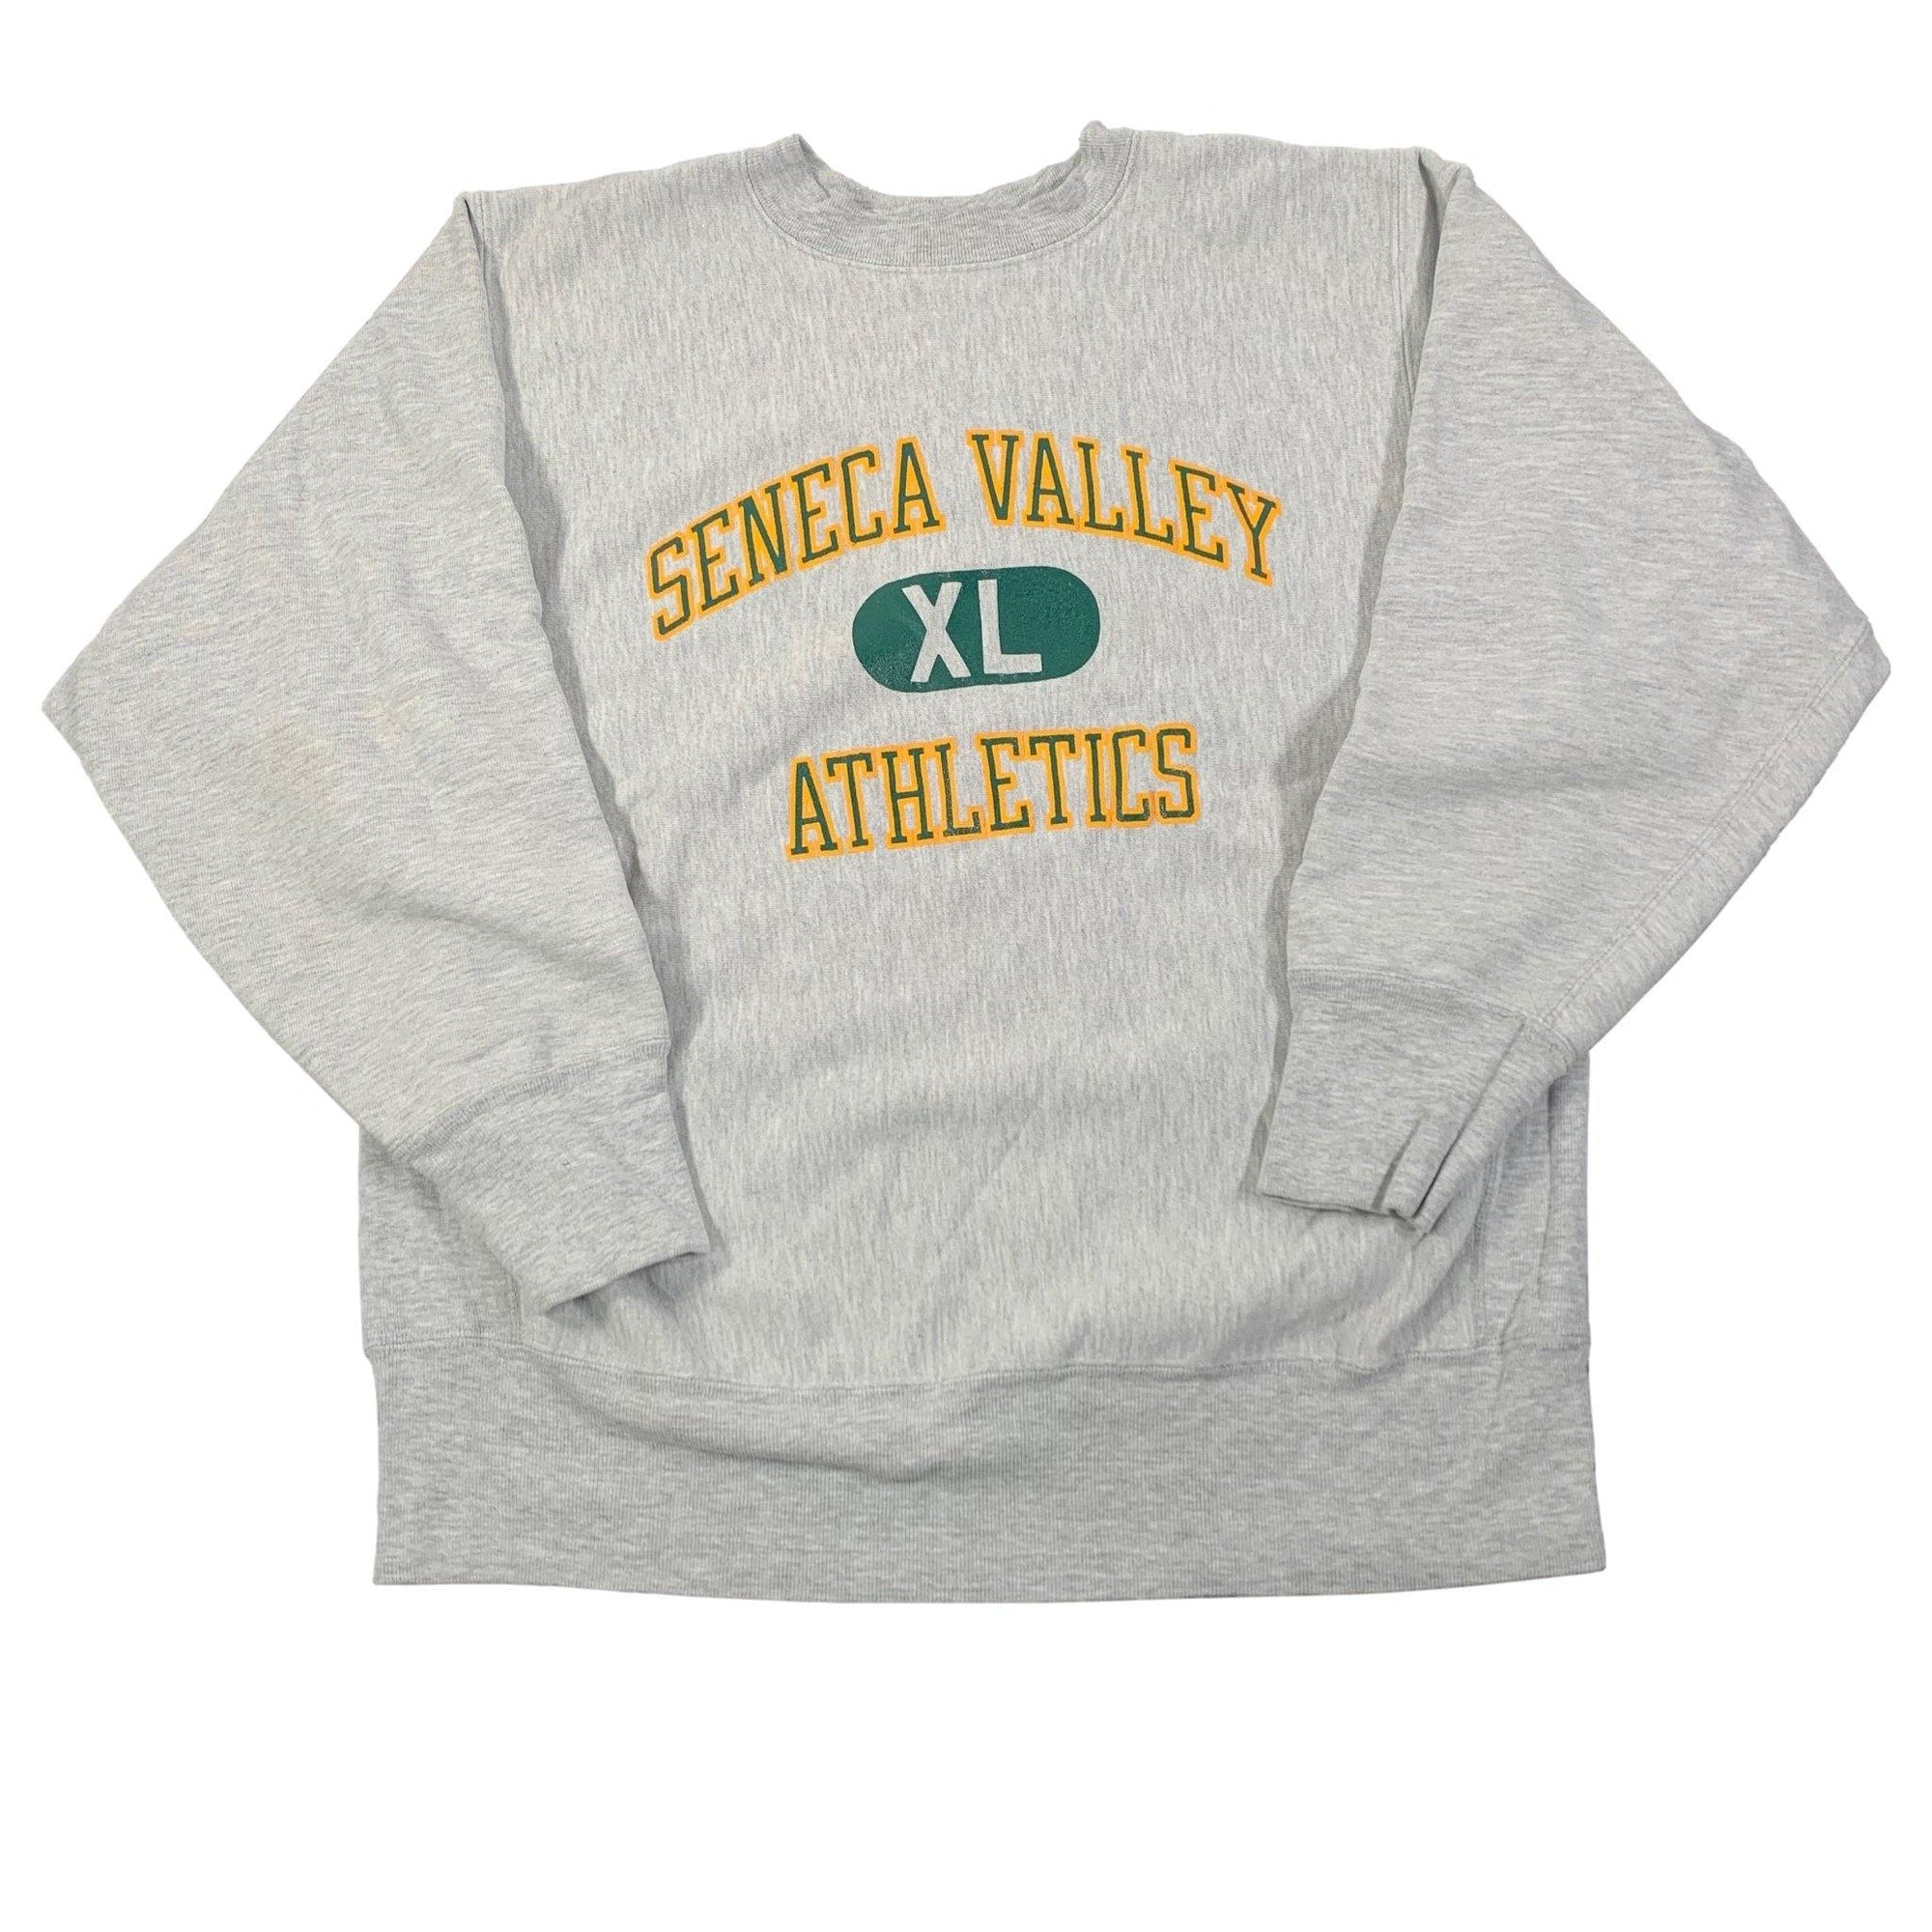 Vintage Champion Reverse Weave "Seneca Valley" Crewneck Sweatshirt - jointcustodydc